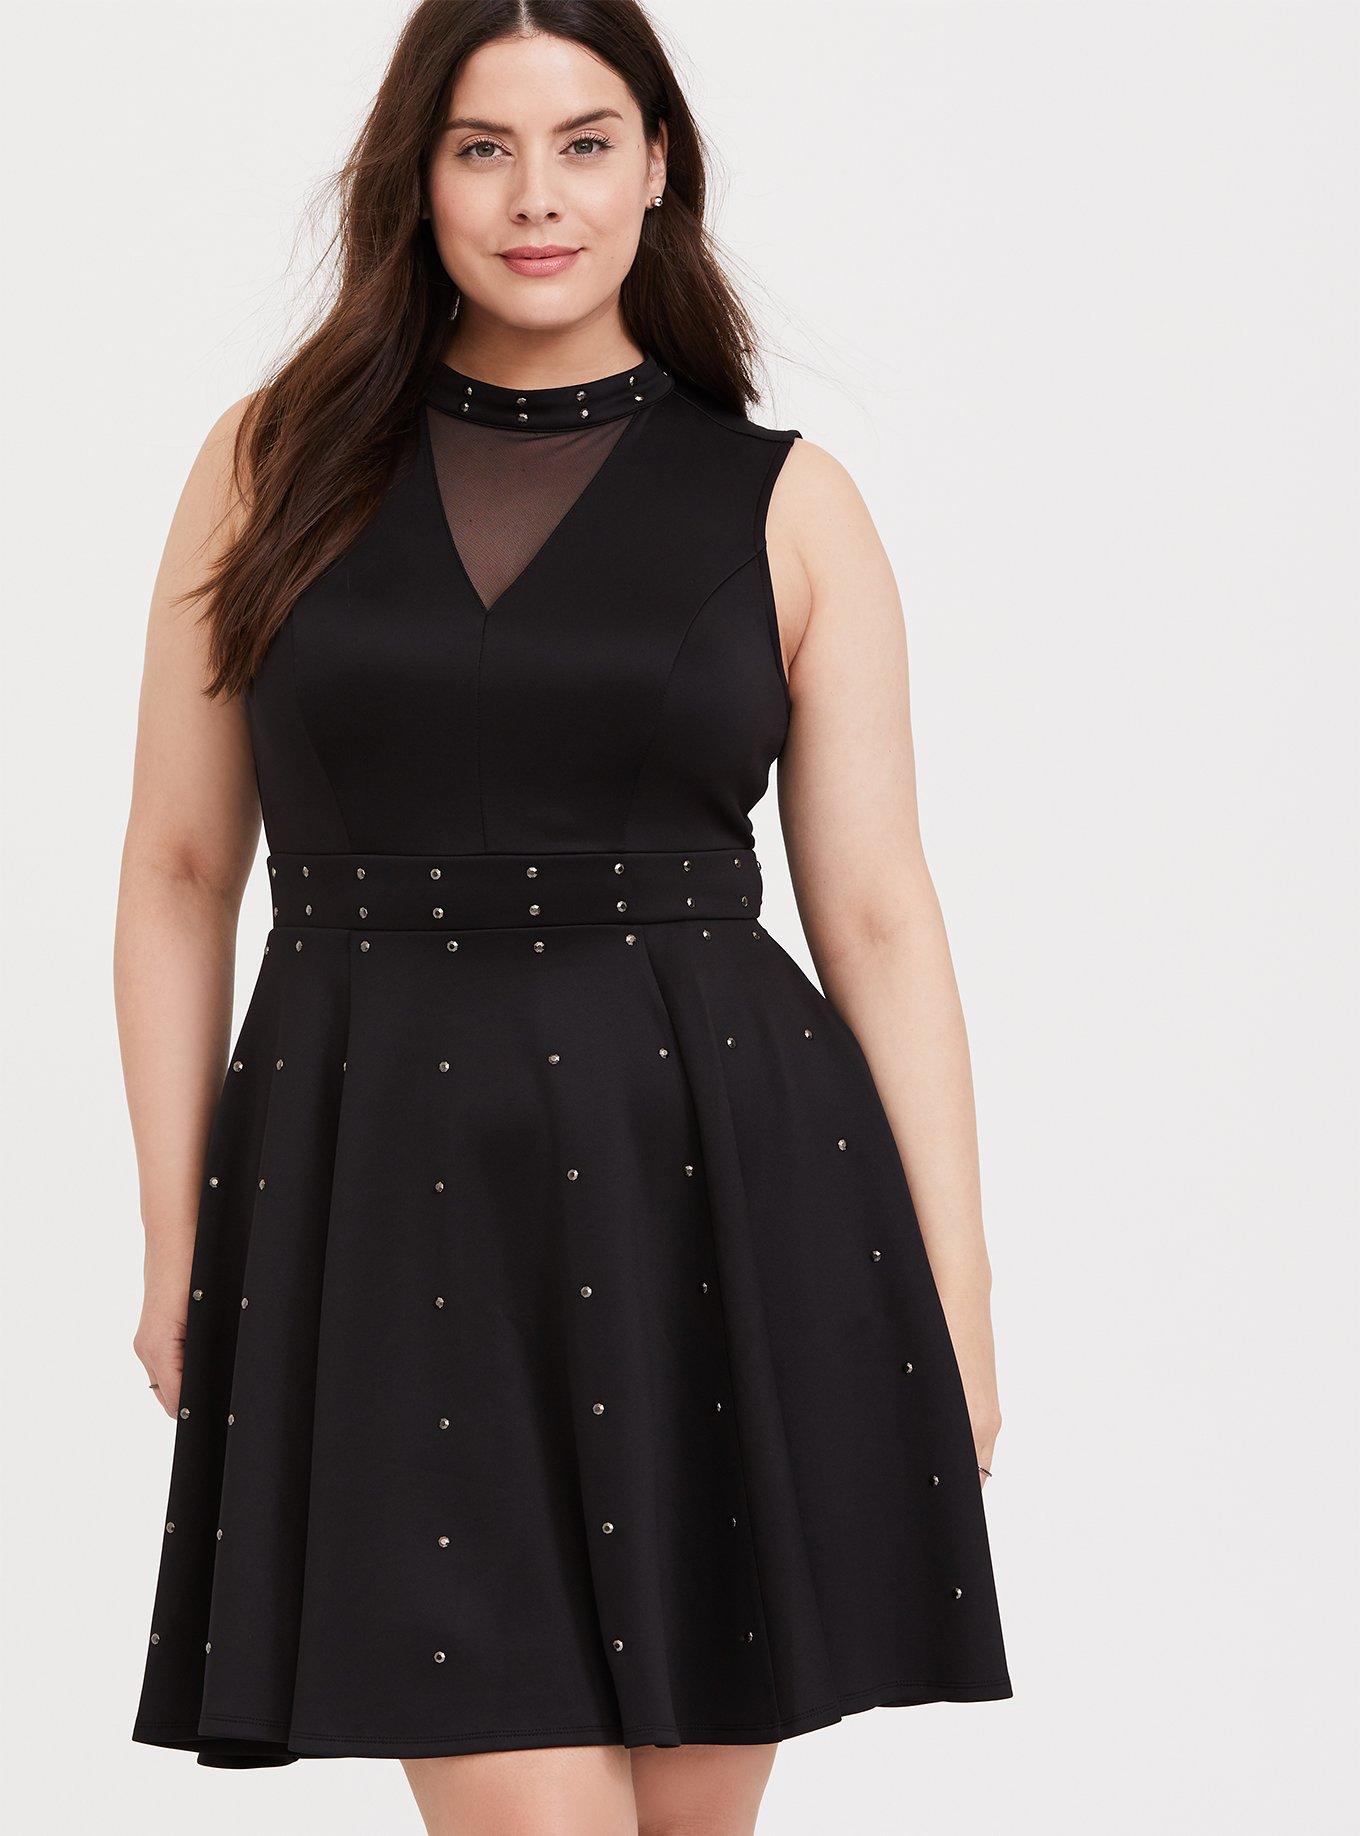 Plus Size - Black Scuba Knit Studded Skater Dress - Torrid